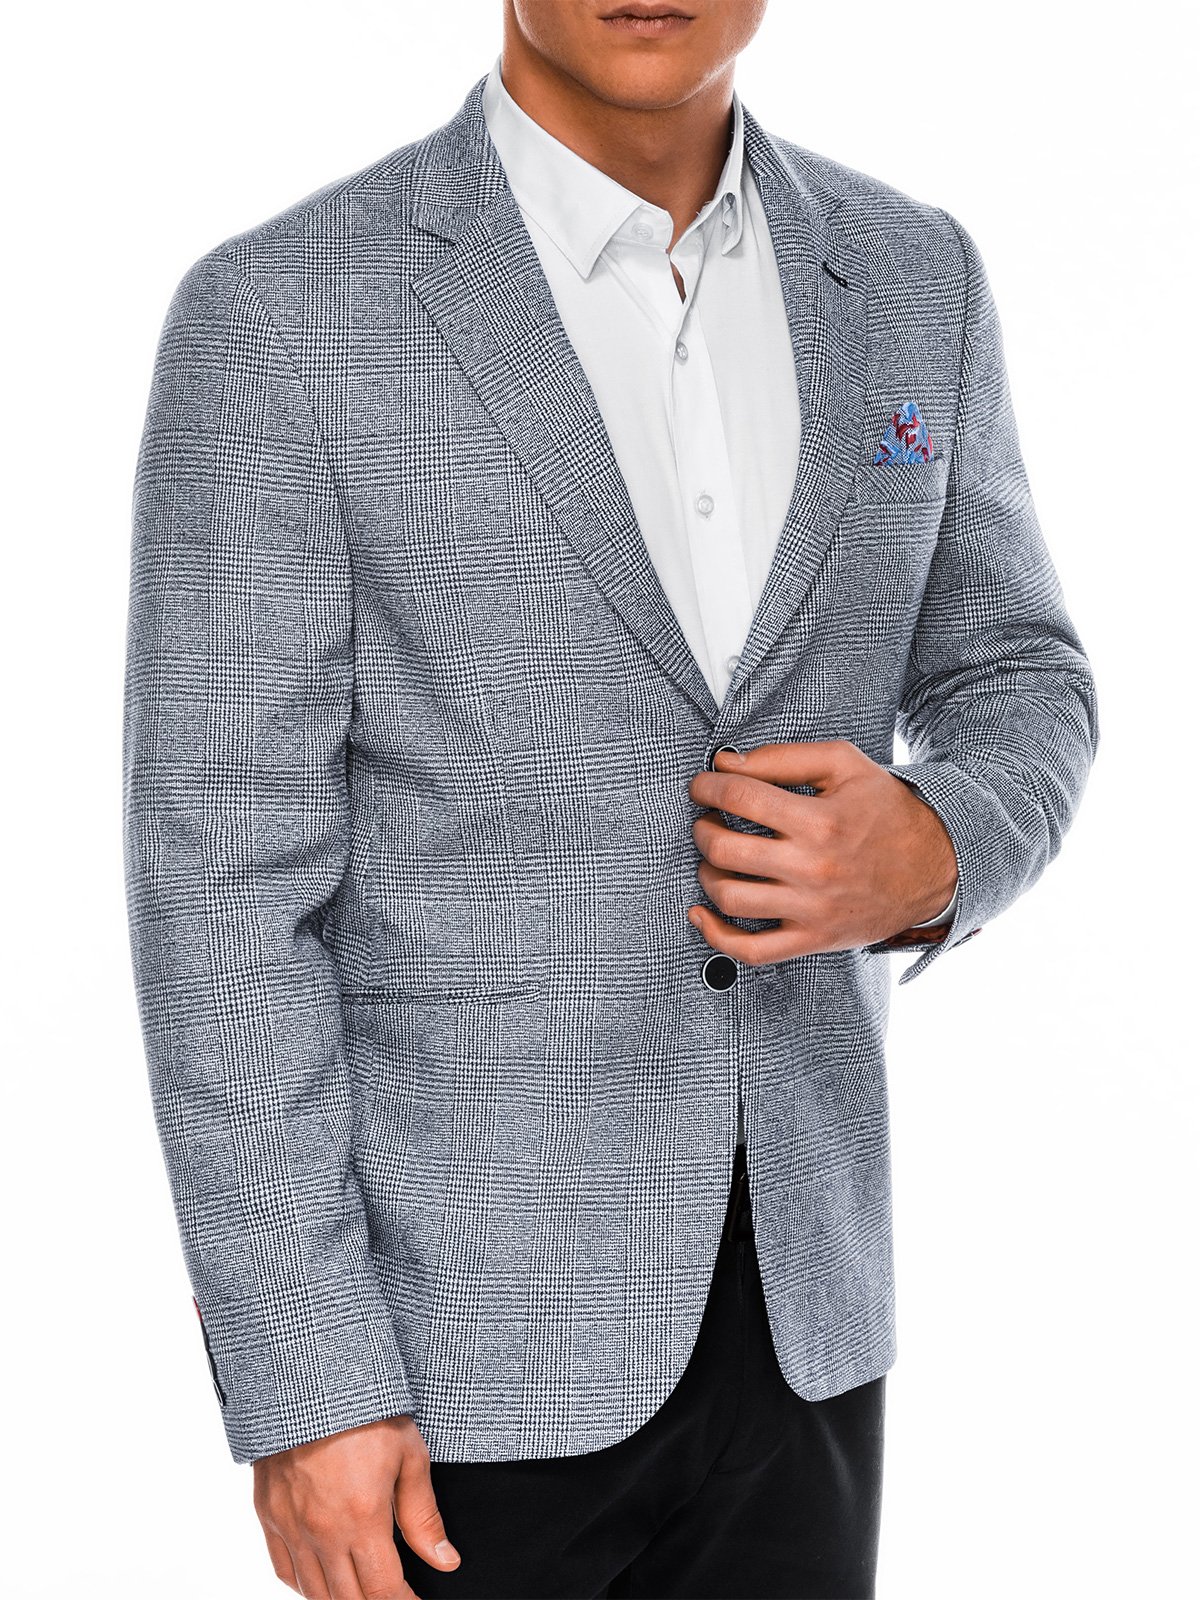 Men's casual blazer jacket M92 - navy | MODONE wholesale - Clothing For Men